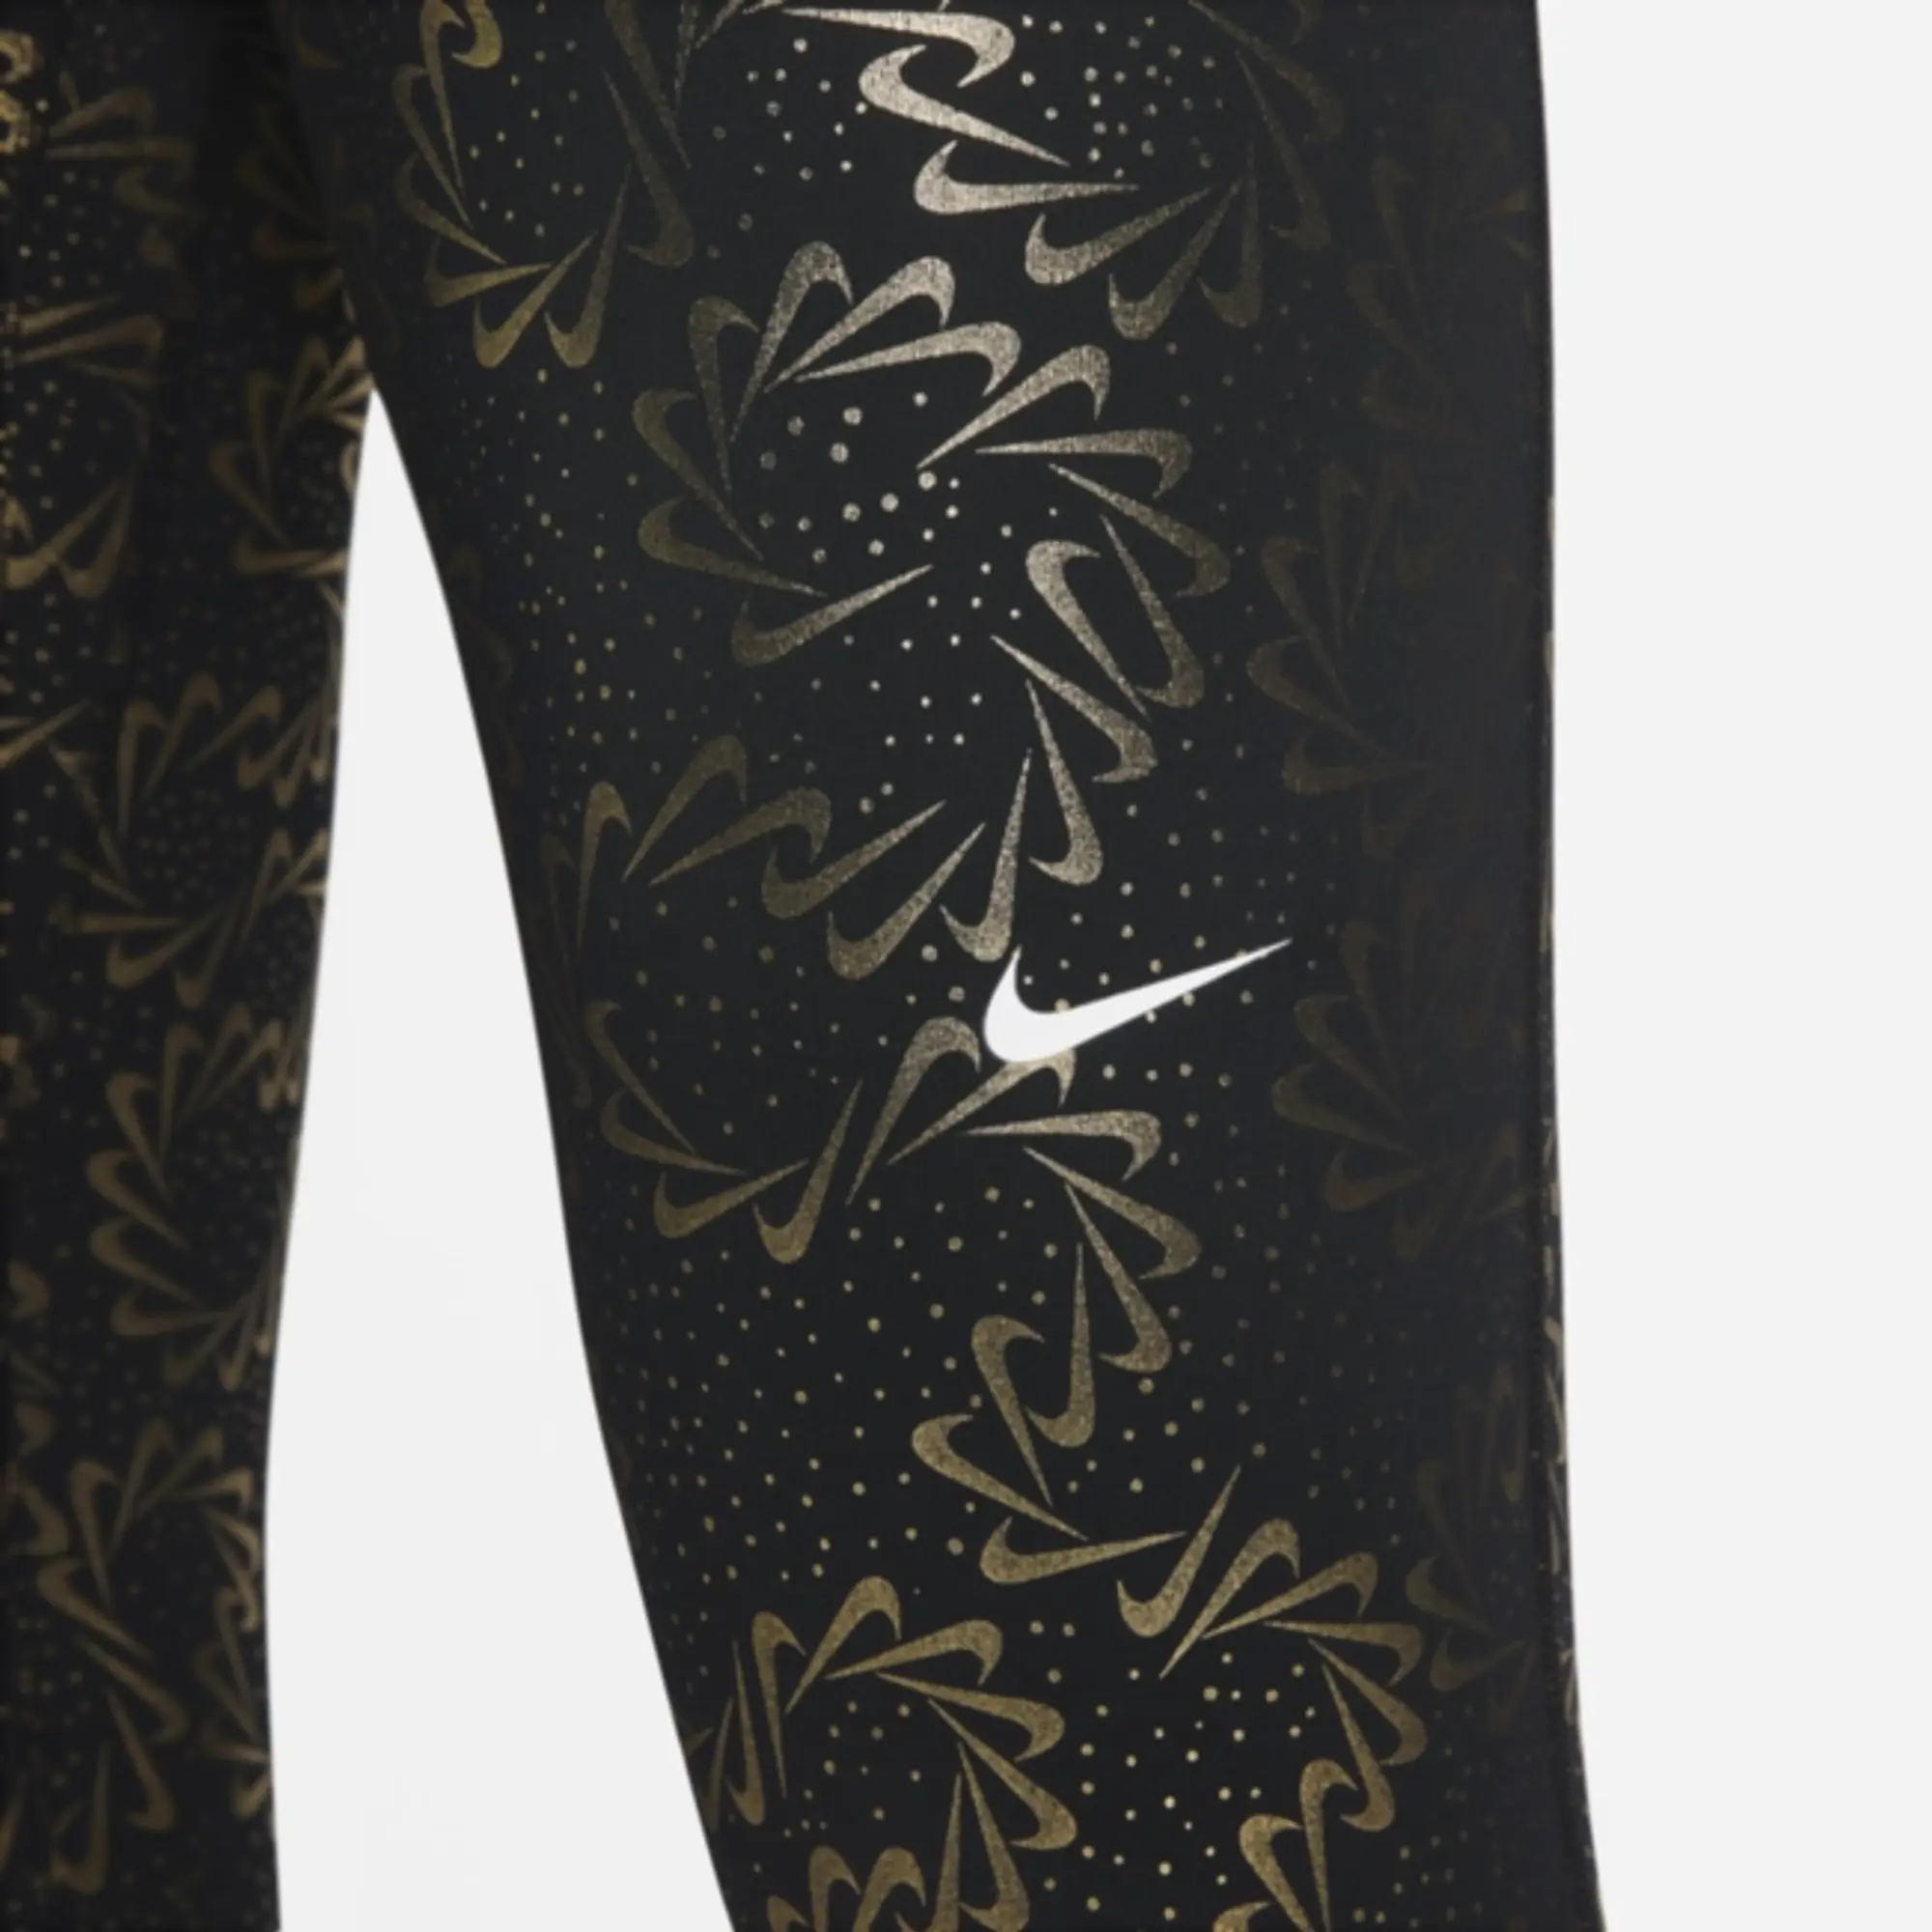 Nike Pro Leggings in Black/Gold and Black/White, DQ6228-010